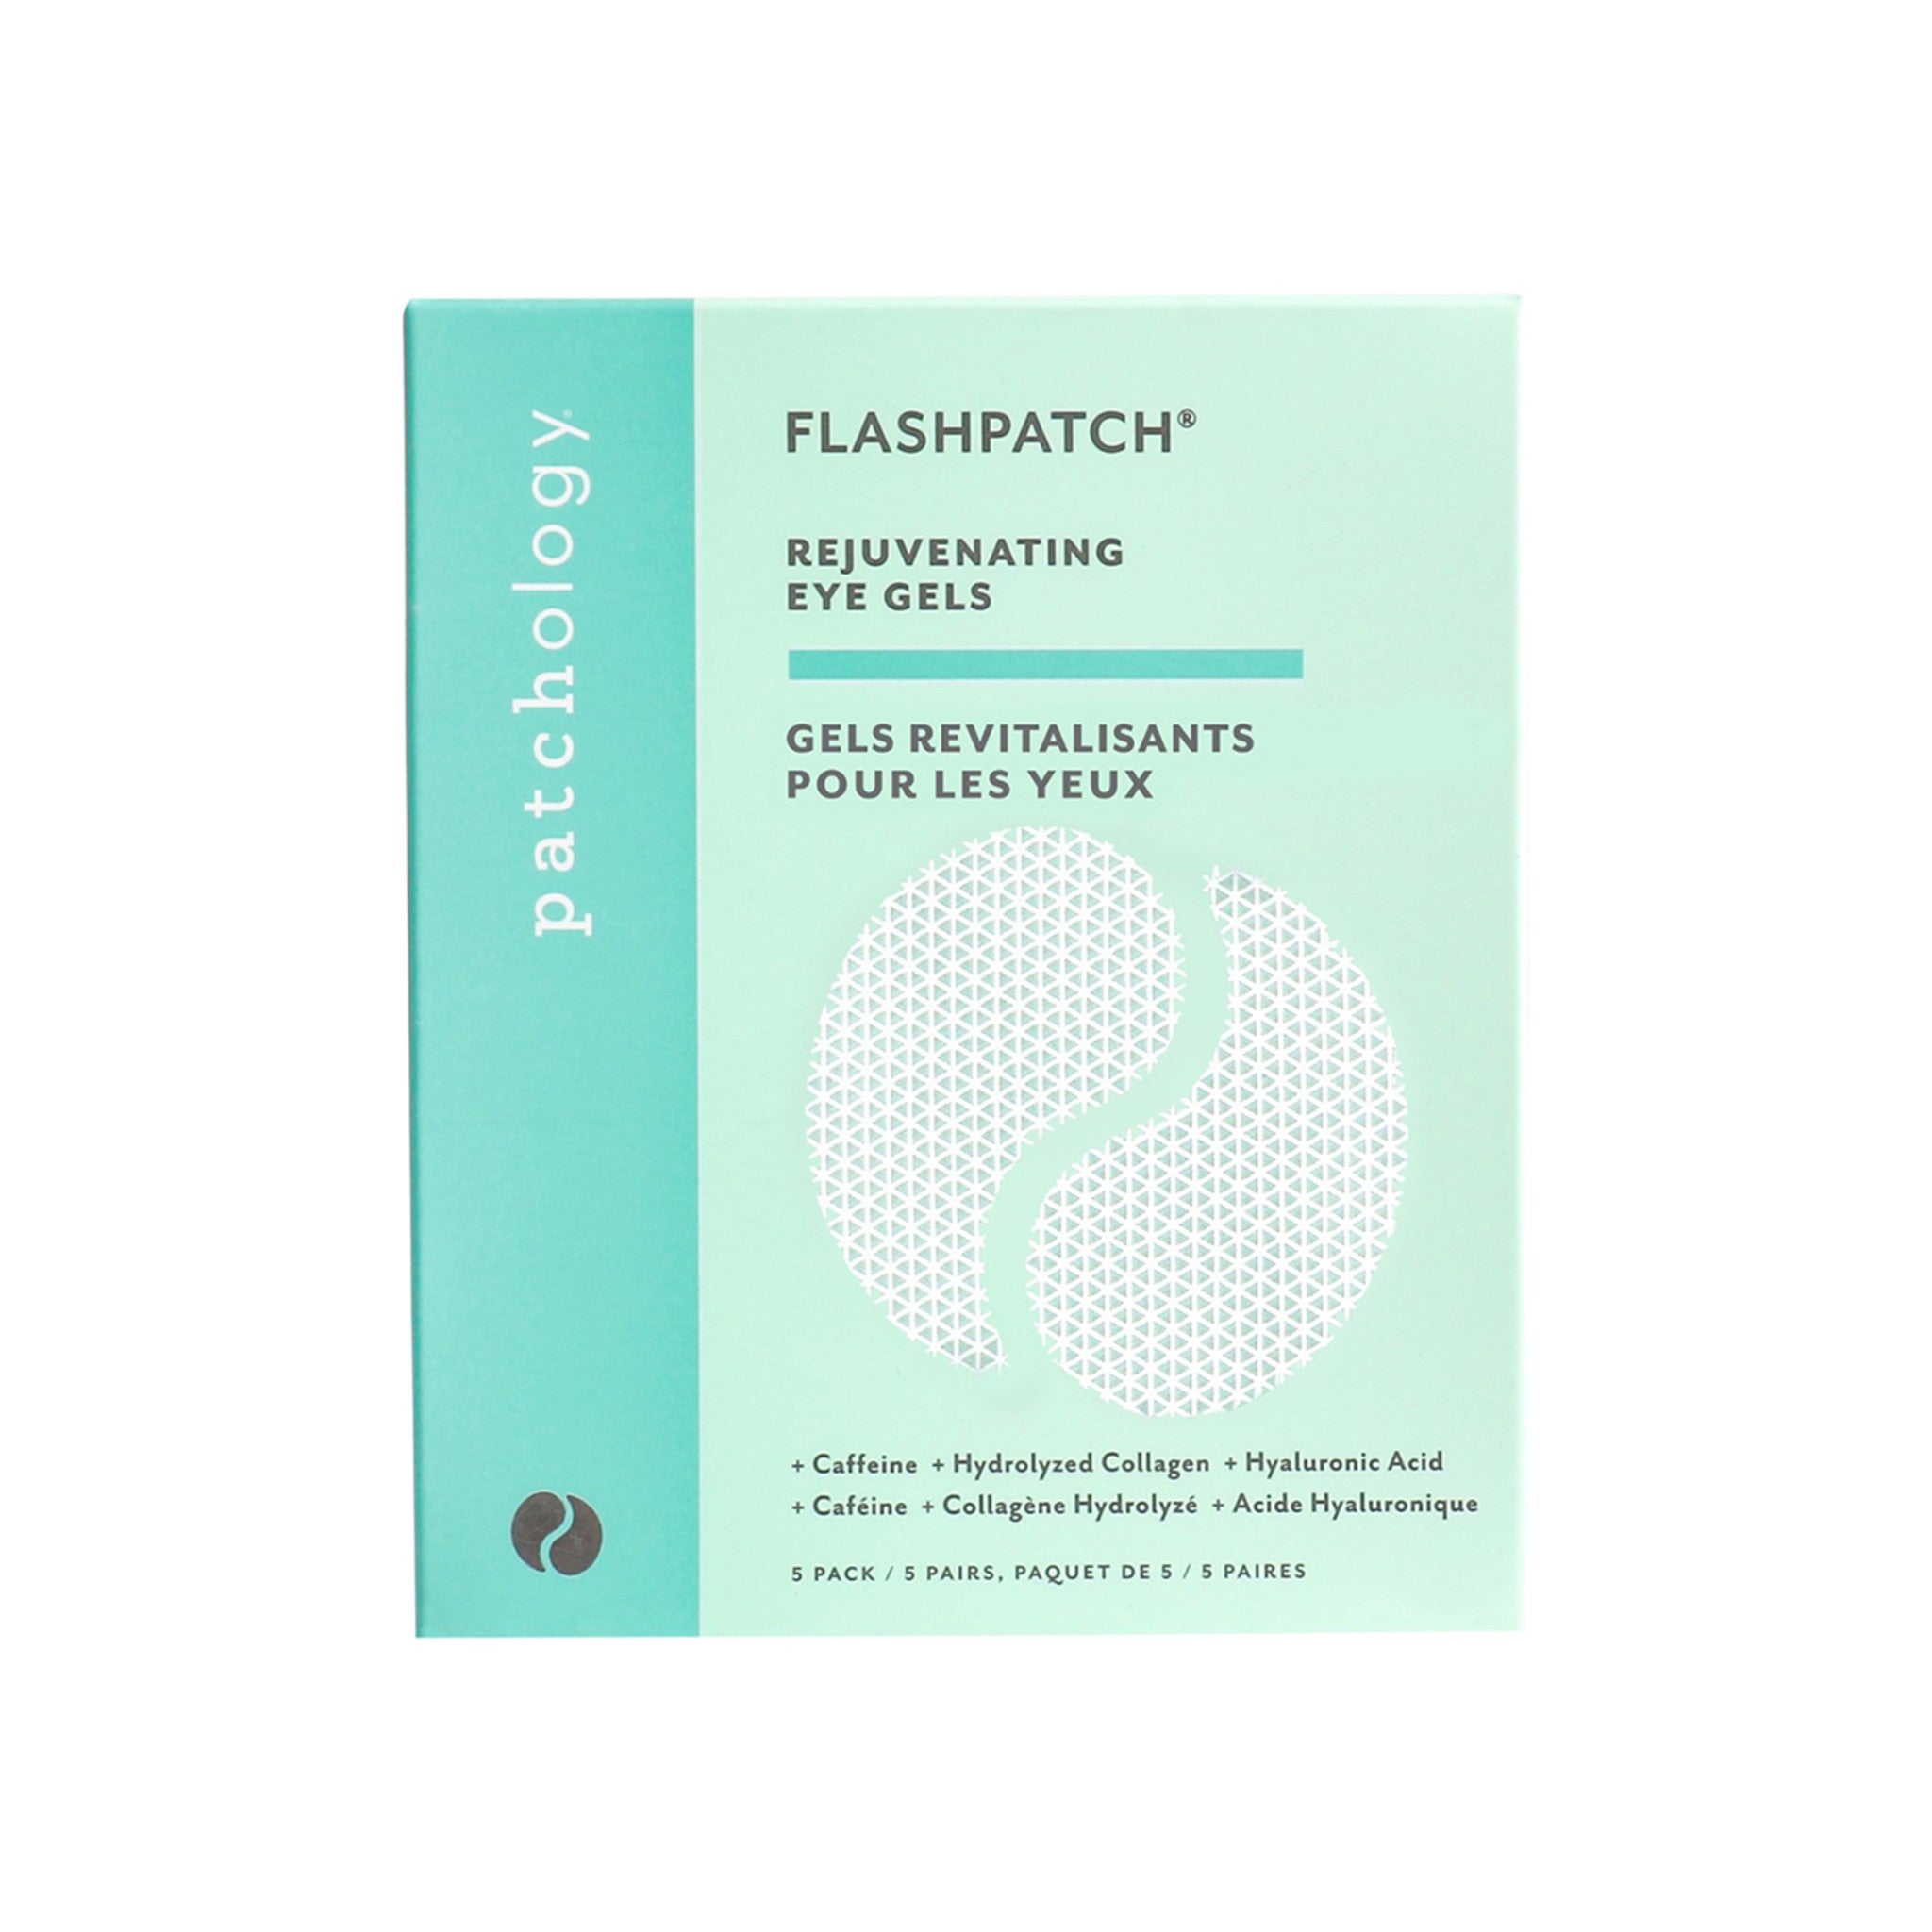 Patchology Flashpatch Rejuvenating Eye Gels Size variant: 5 Treatments main image.